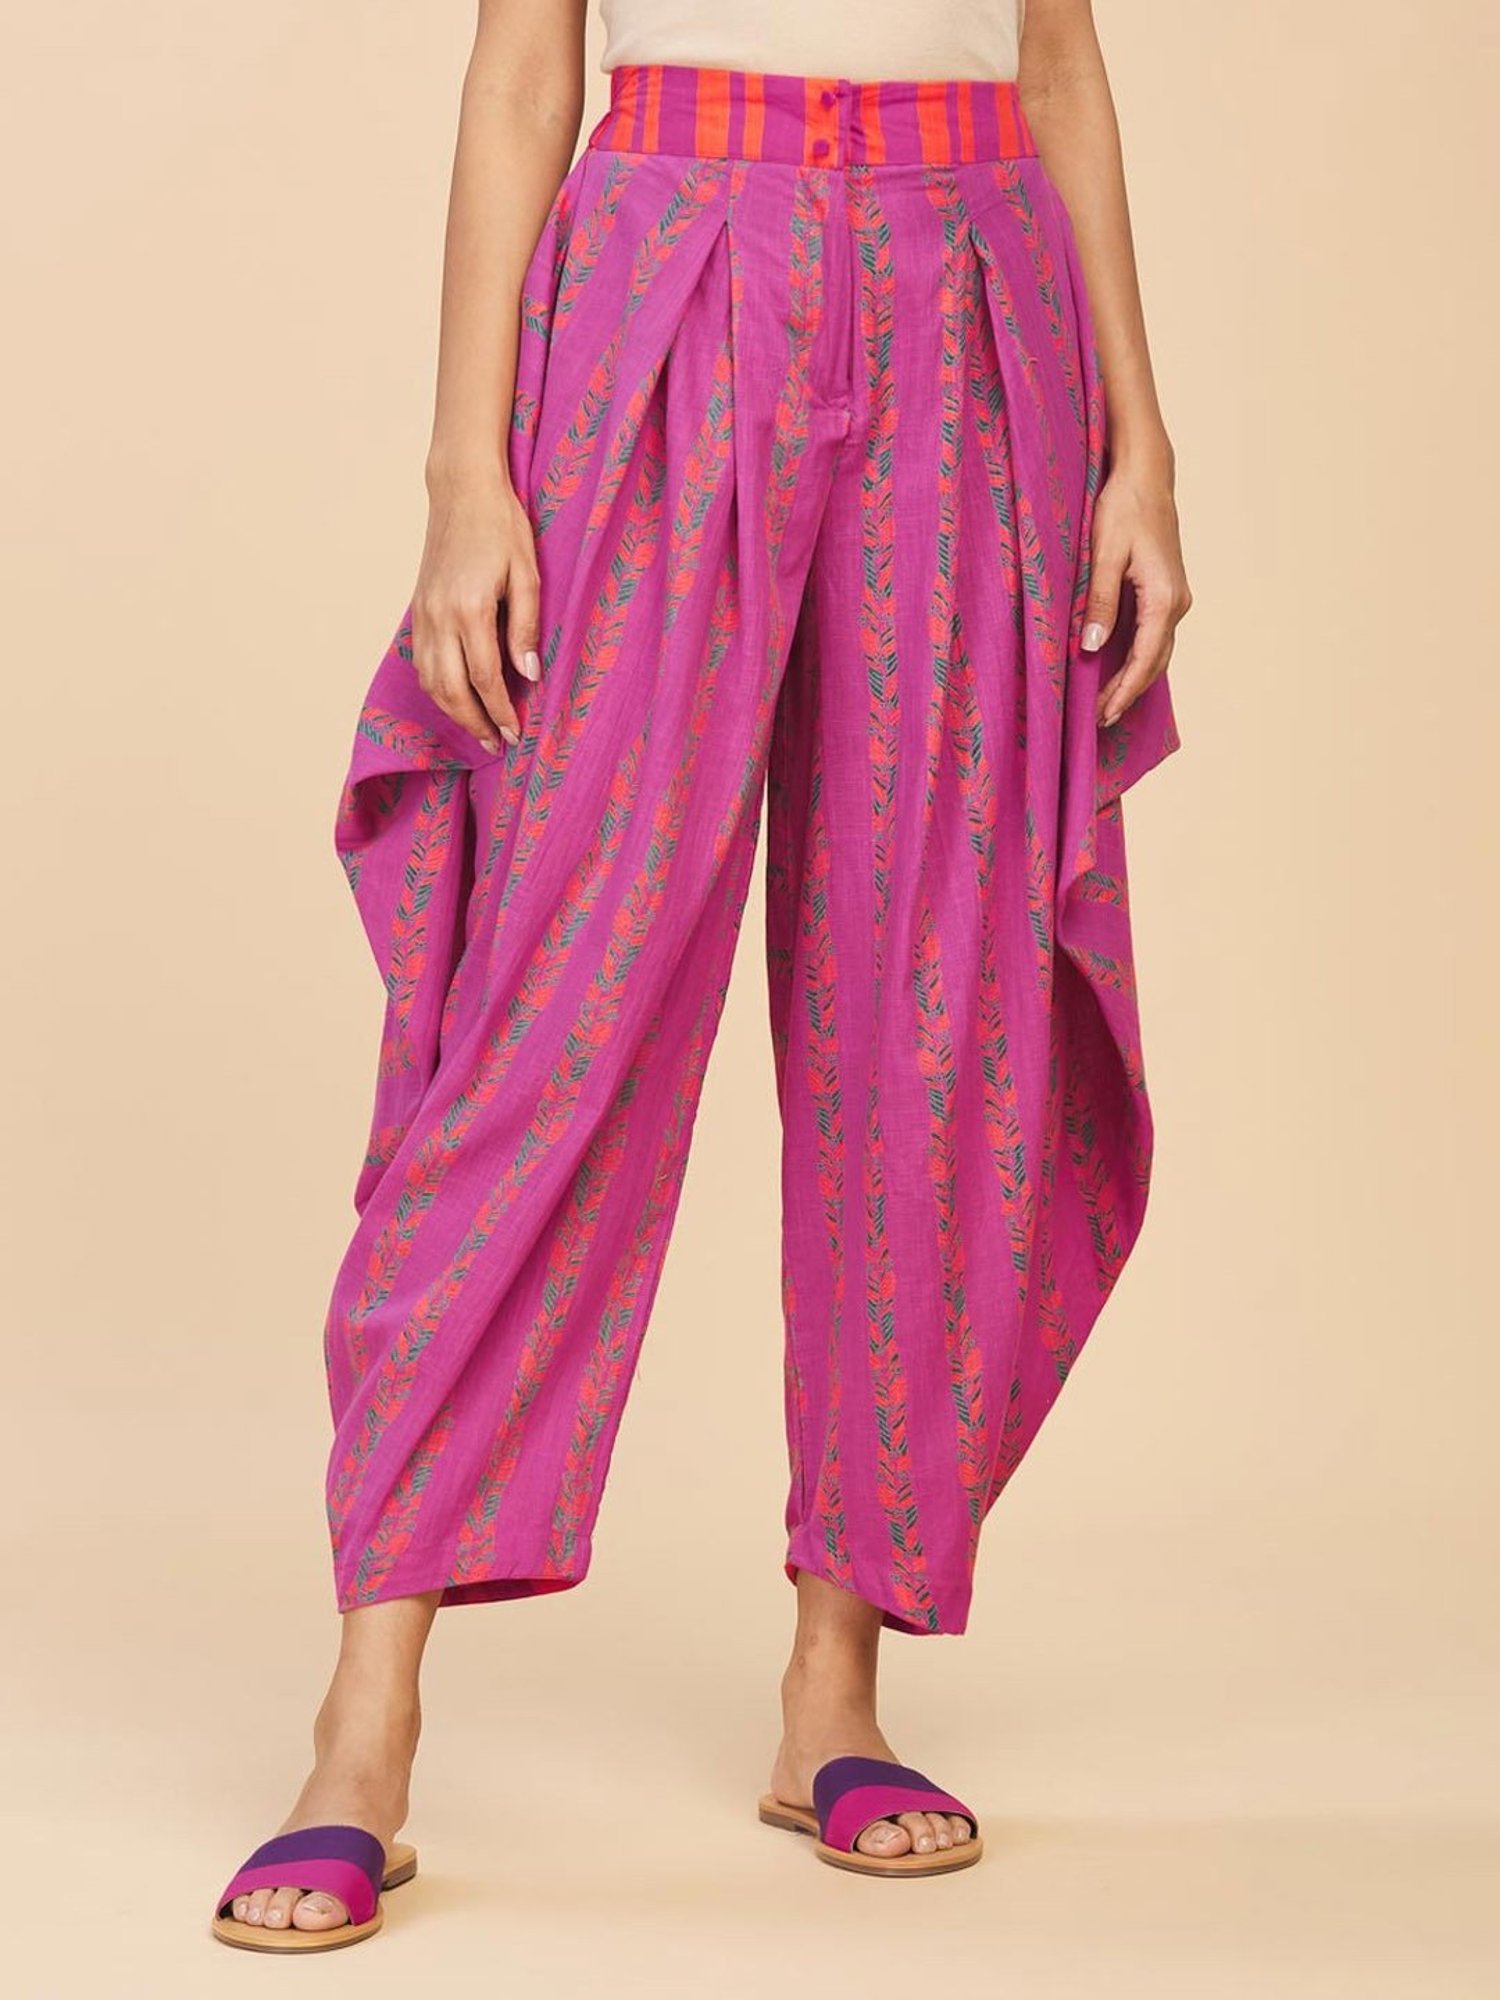 Fabindia Dhoti Pants : Buy Fabindia Peach Cotton Overlap Dhoti Online |  Nykaa Fashion